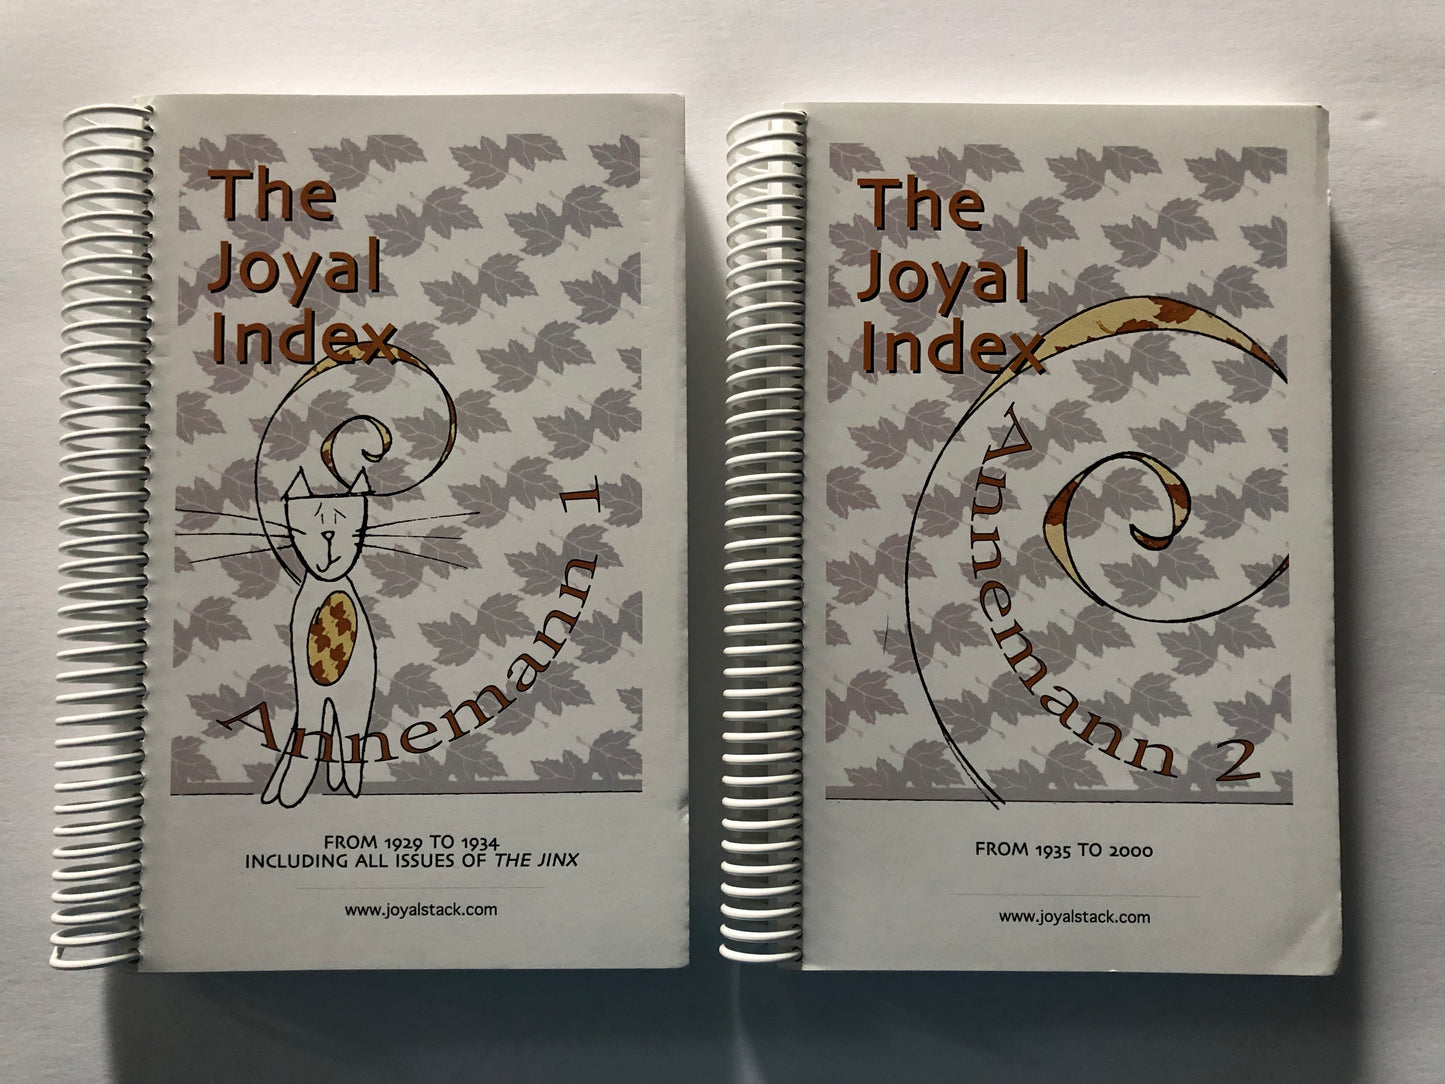 The Joyal Index - Annemann 1, Annemann 2